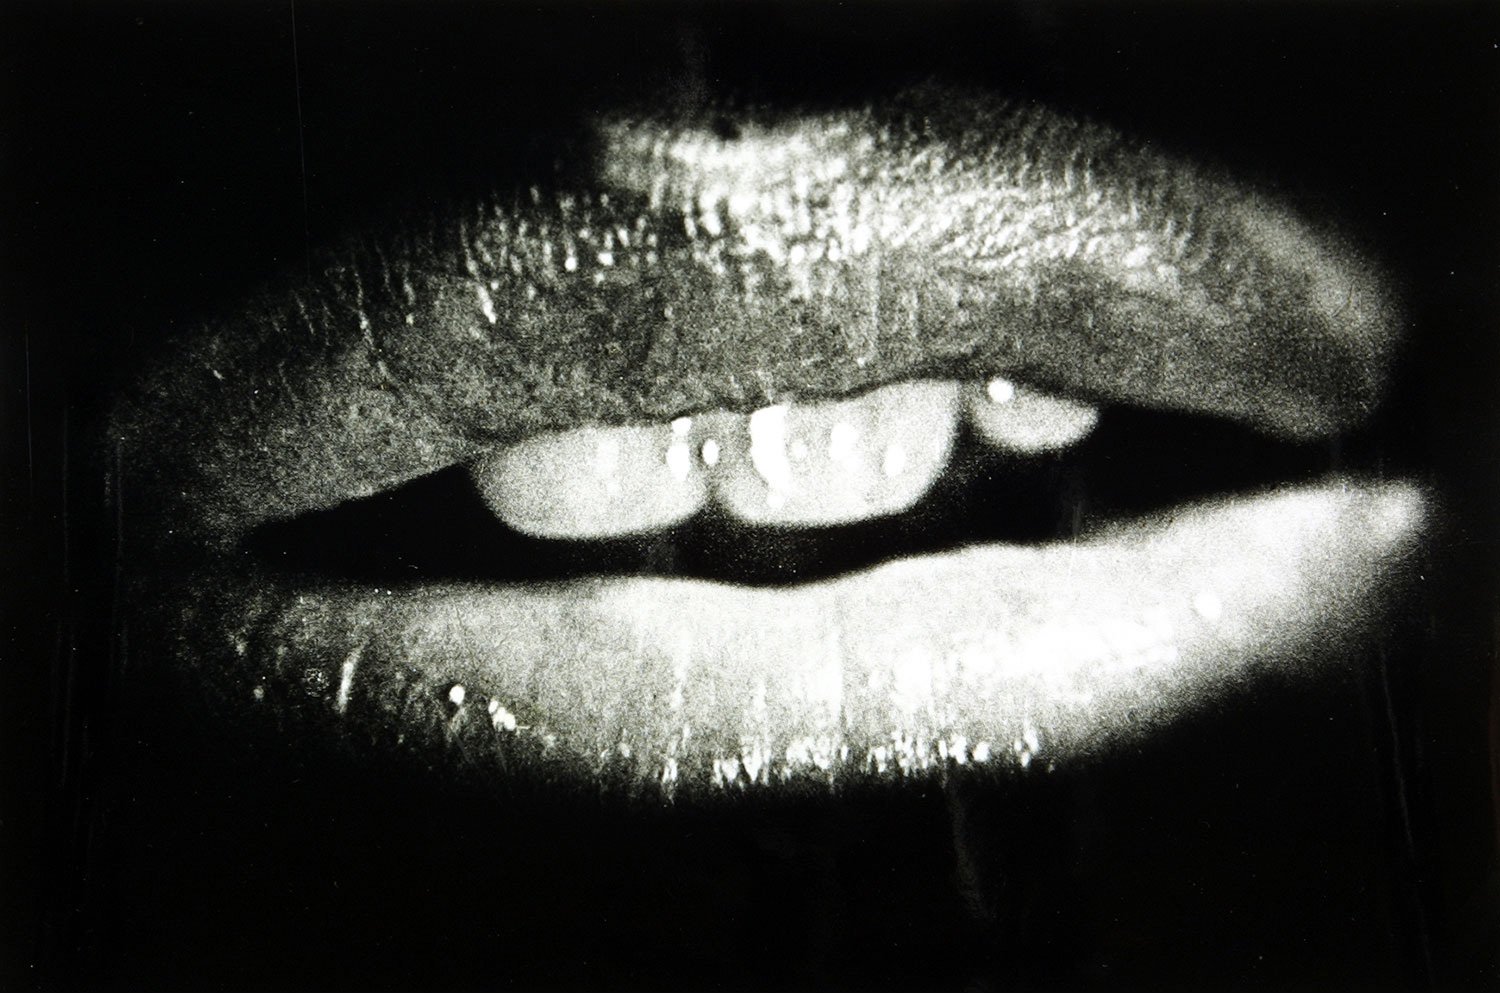  © Daidō Moriyama: Lips from a Poster, 1975 